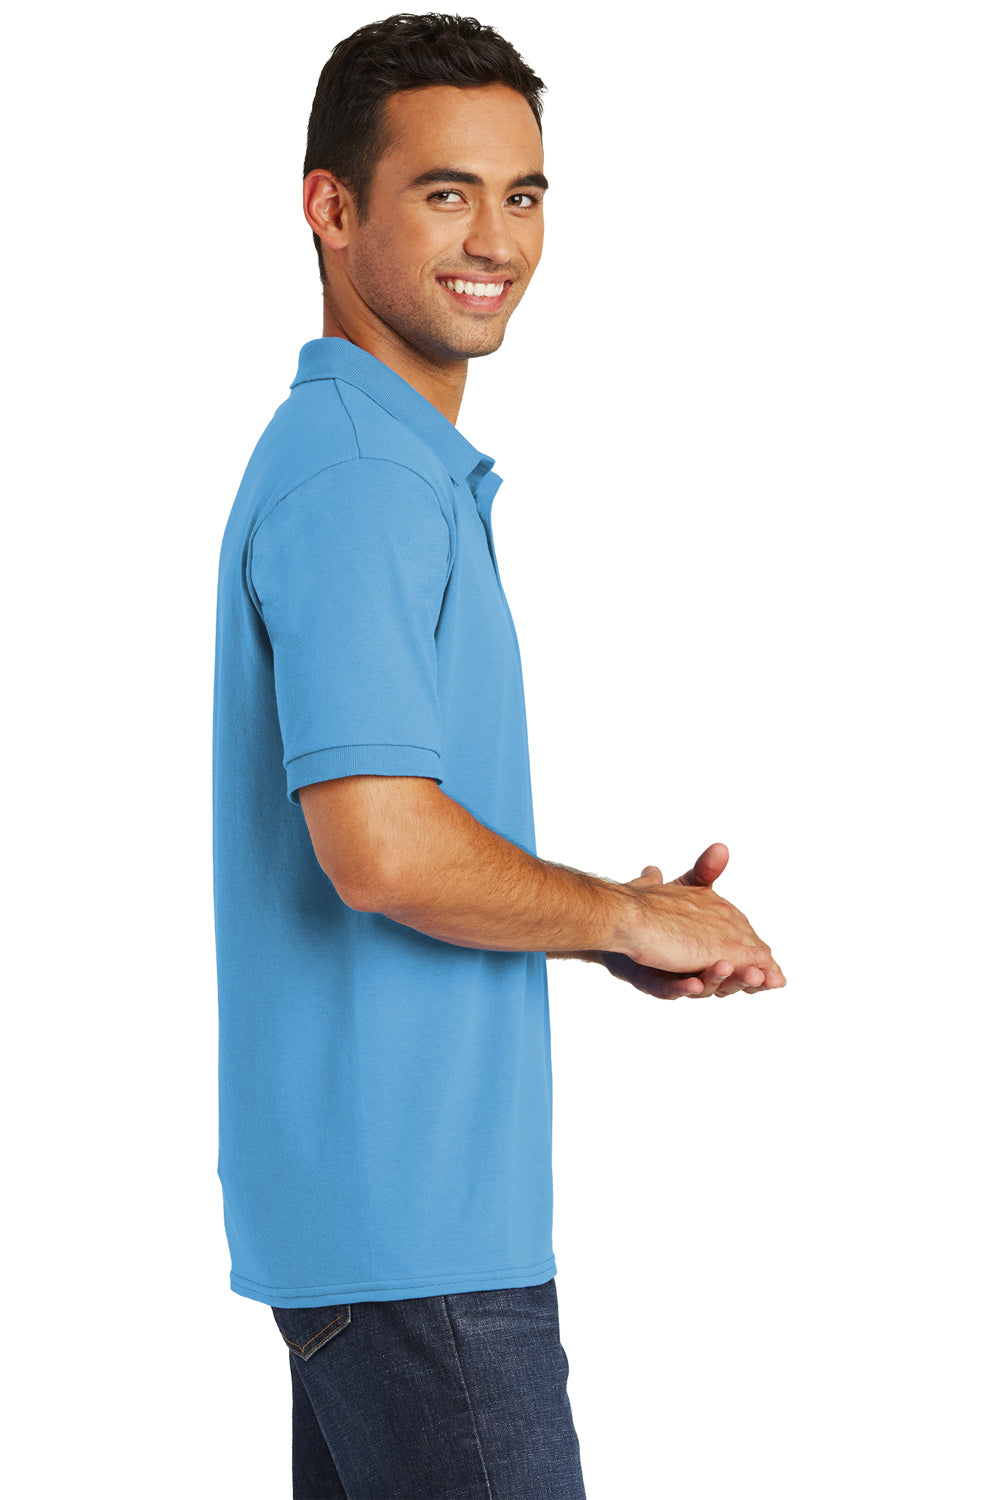 Port & Company KP55 Mens Core Stain Resistant Short Sleeve Polo Shirt Aqua Blue Side